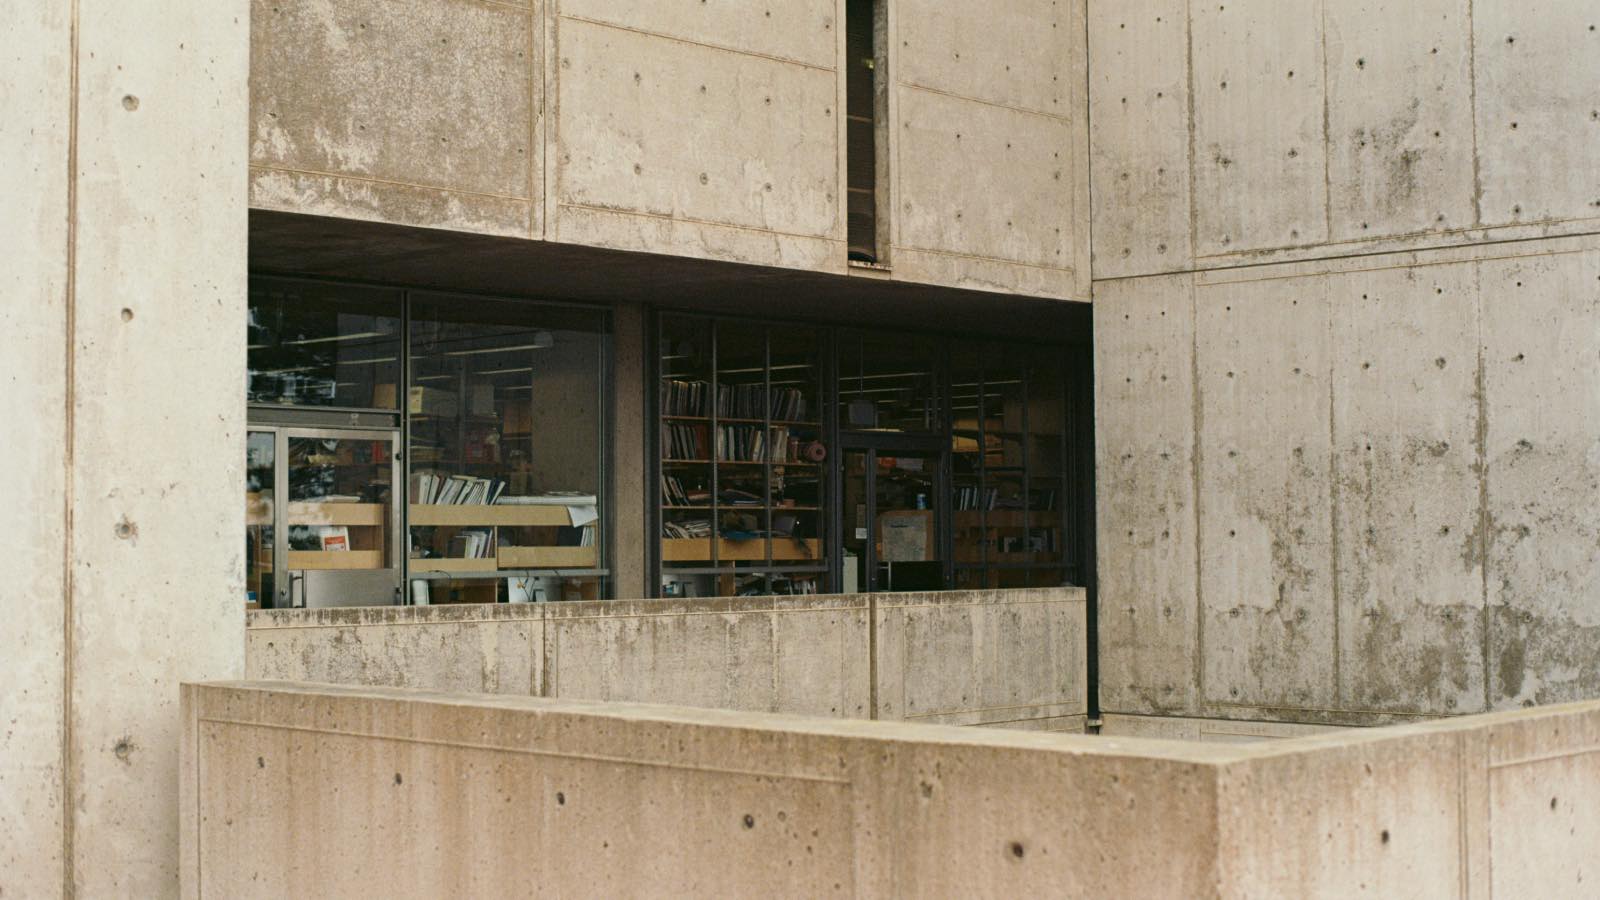 Salk Institute, California. biblioteca arquitectura brutalista, hormigón armado